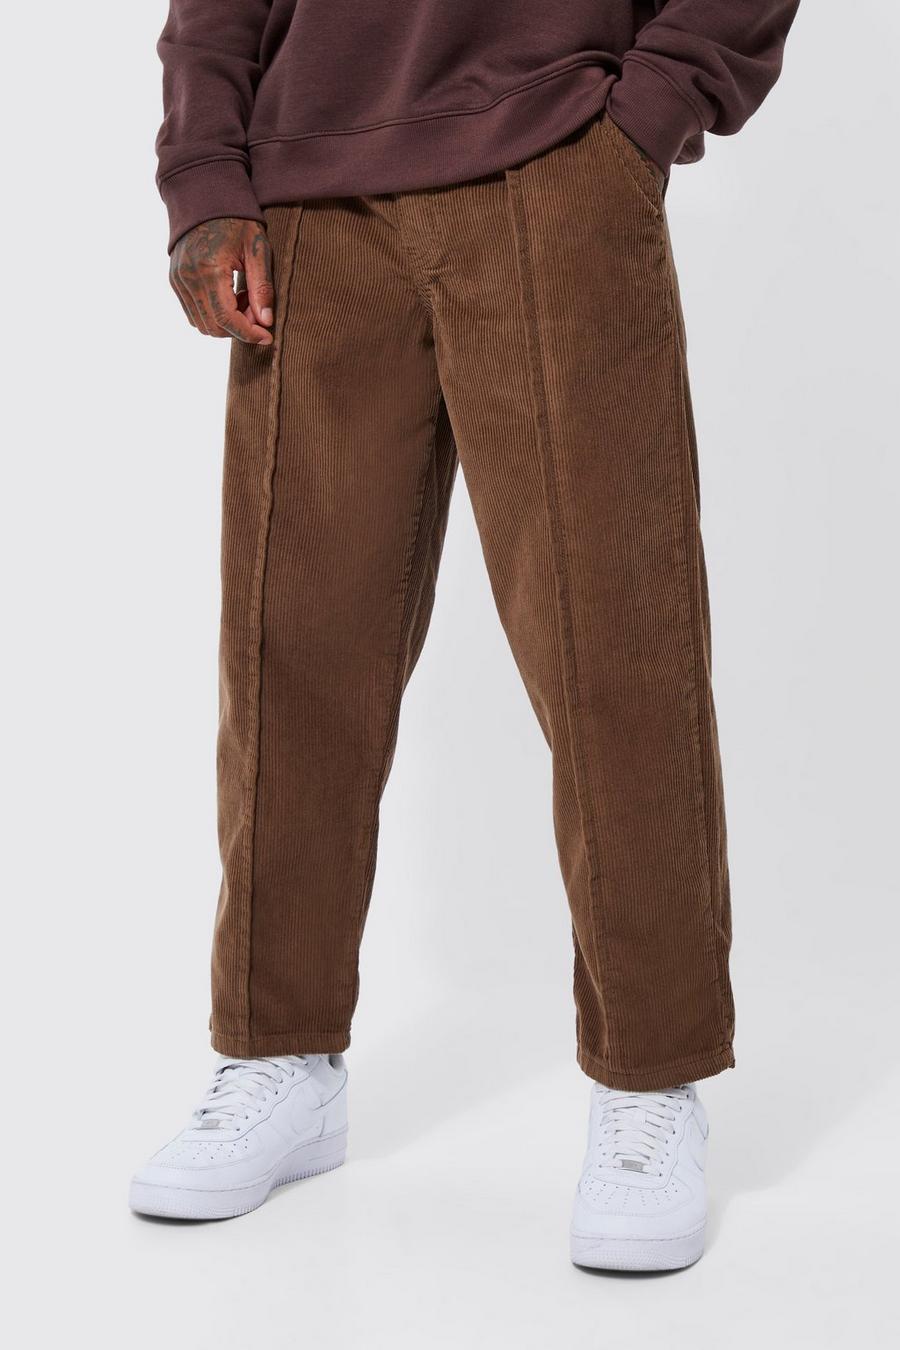 Chocolate marrón Cord Skate Trouser With Pintucks